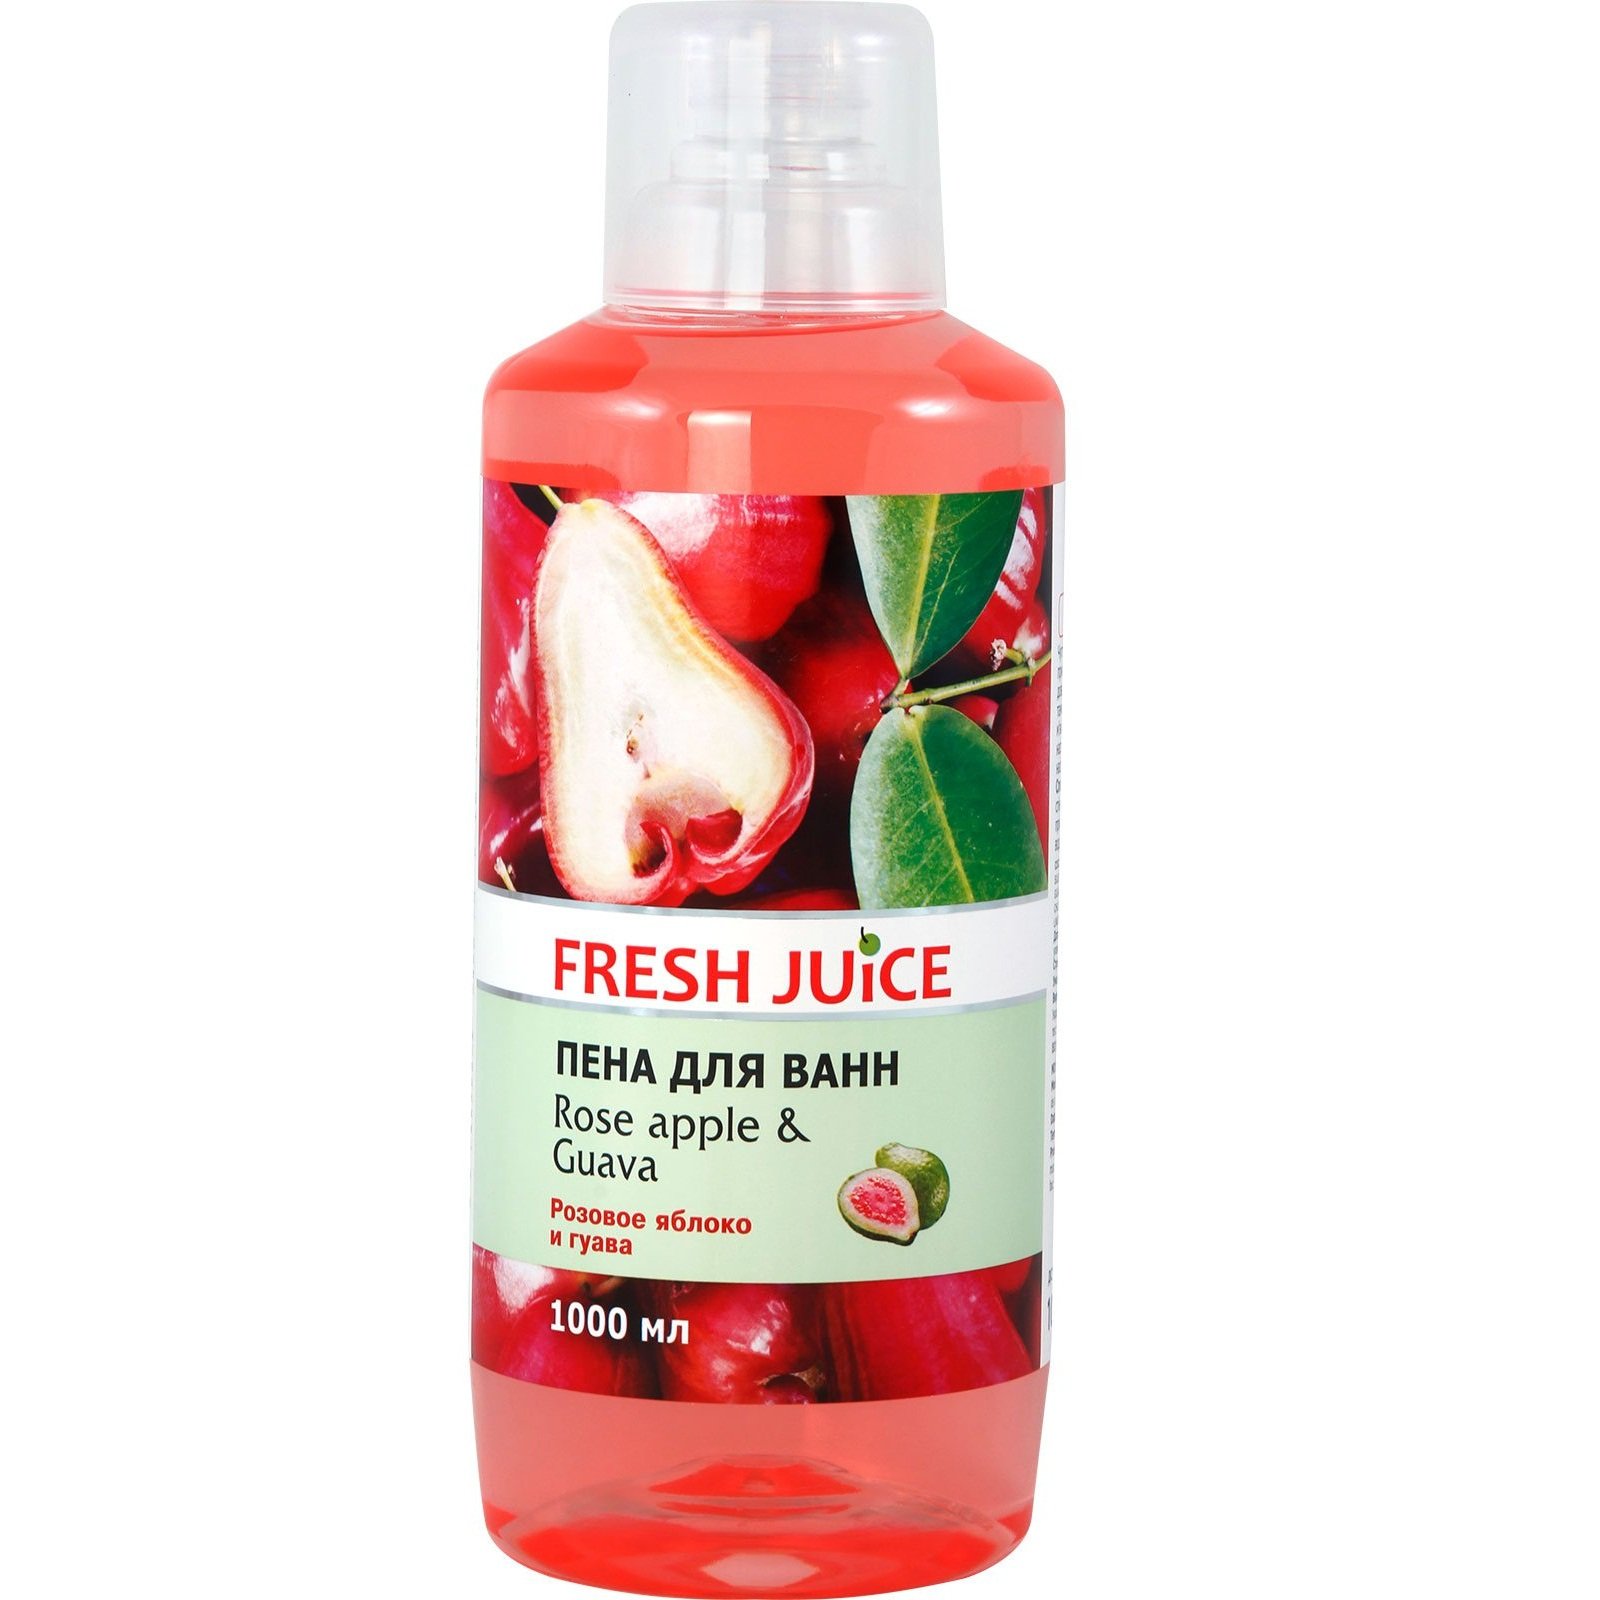 Пена для ванн Fresh Juice Rose apple & Guava 1 л - фото 1